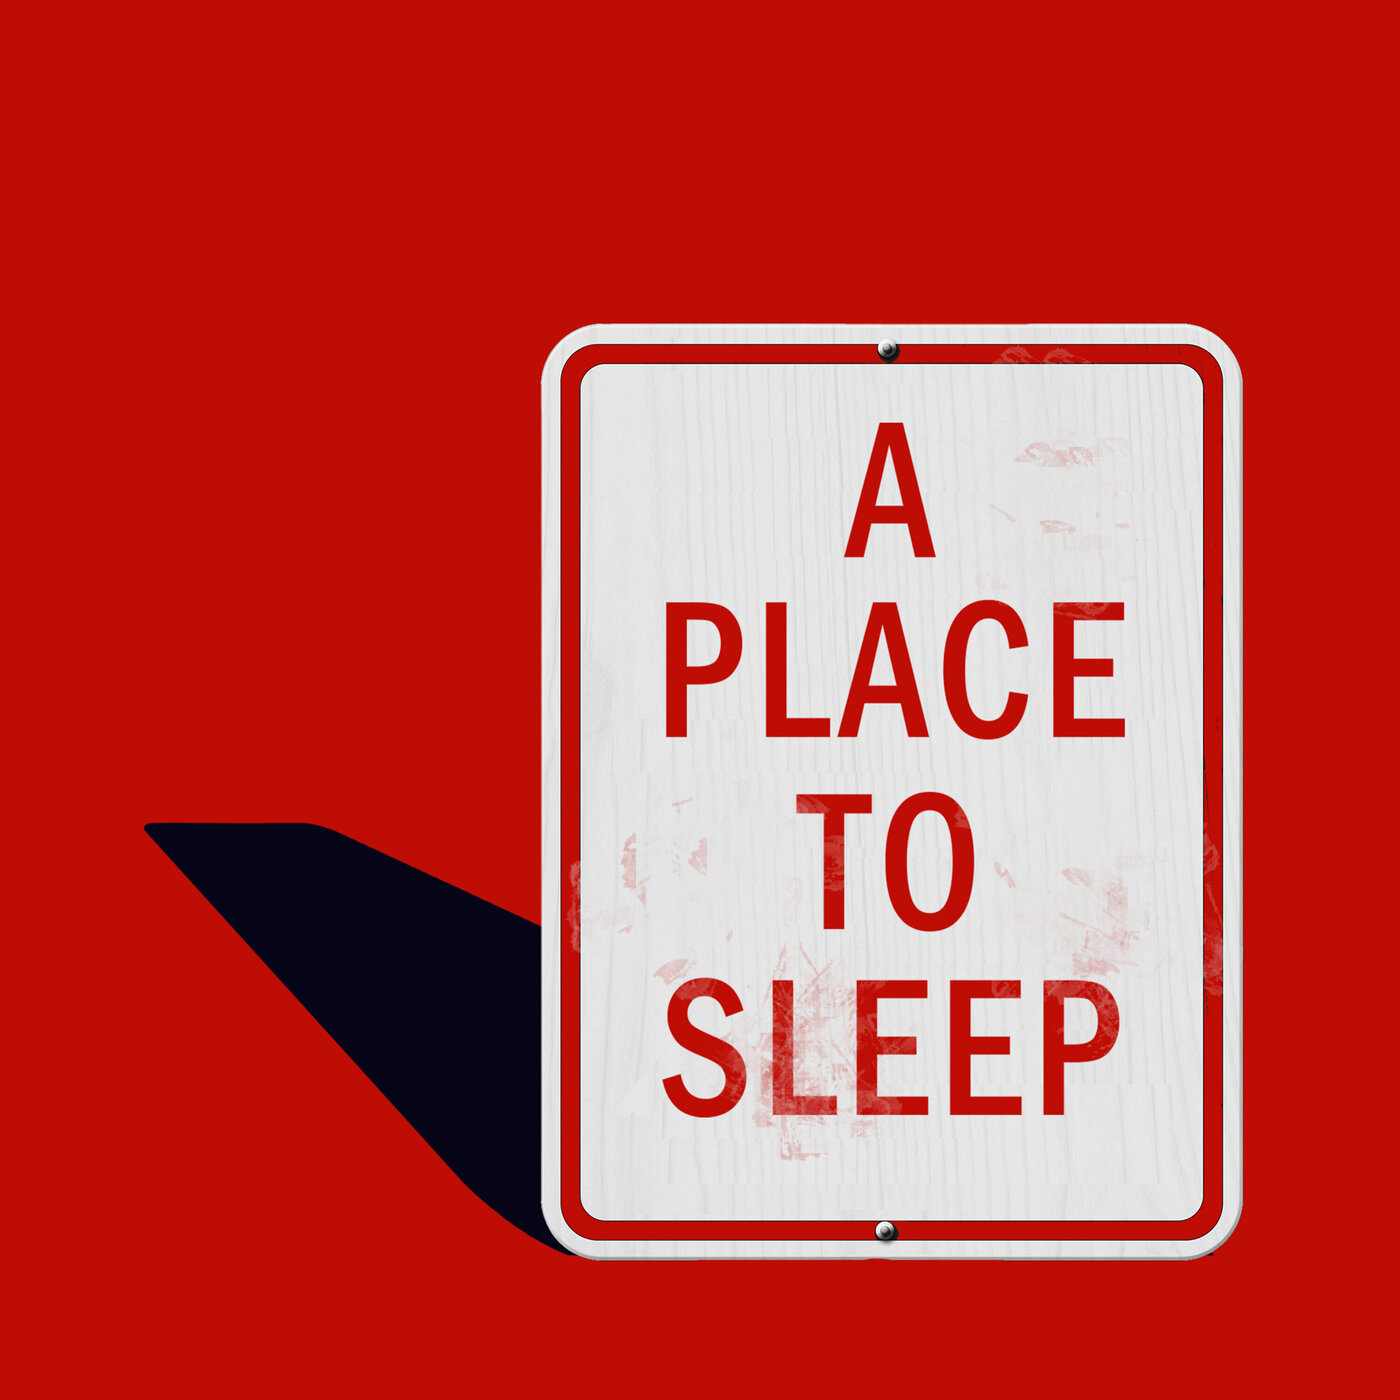 Trailer: A Place to Sleep